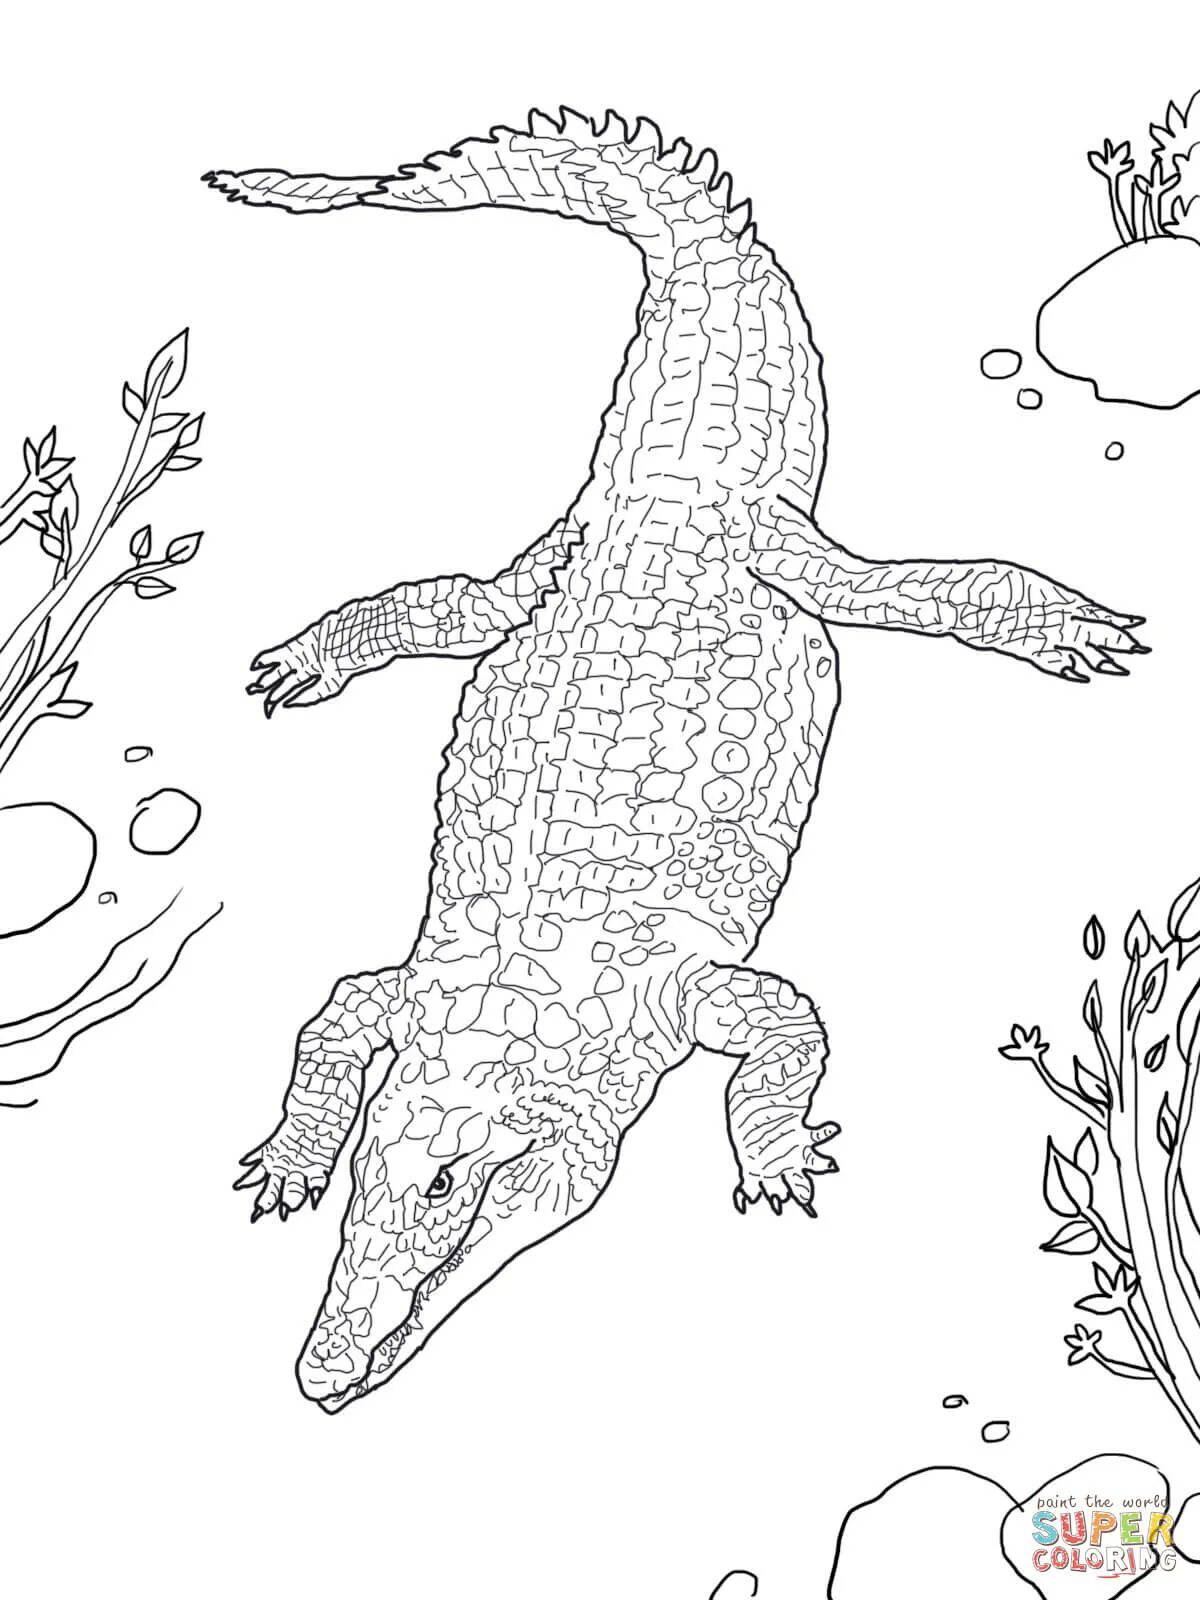 Coloring page incredible combed crocodile